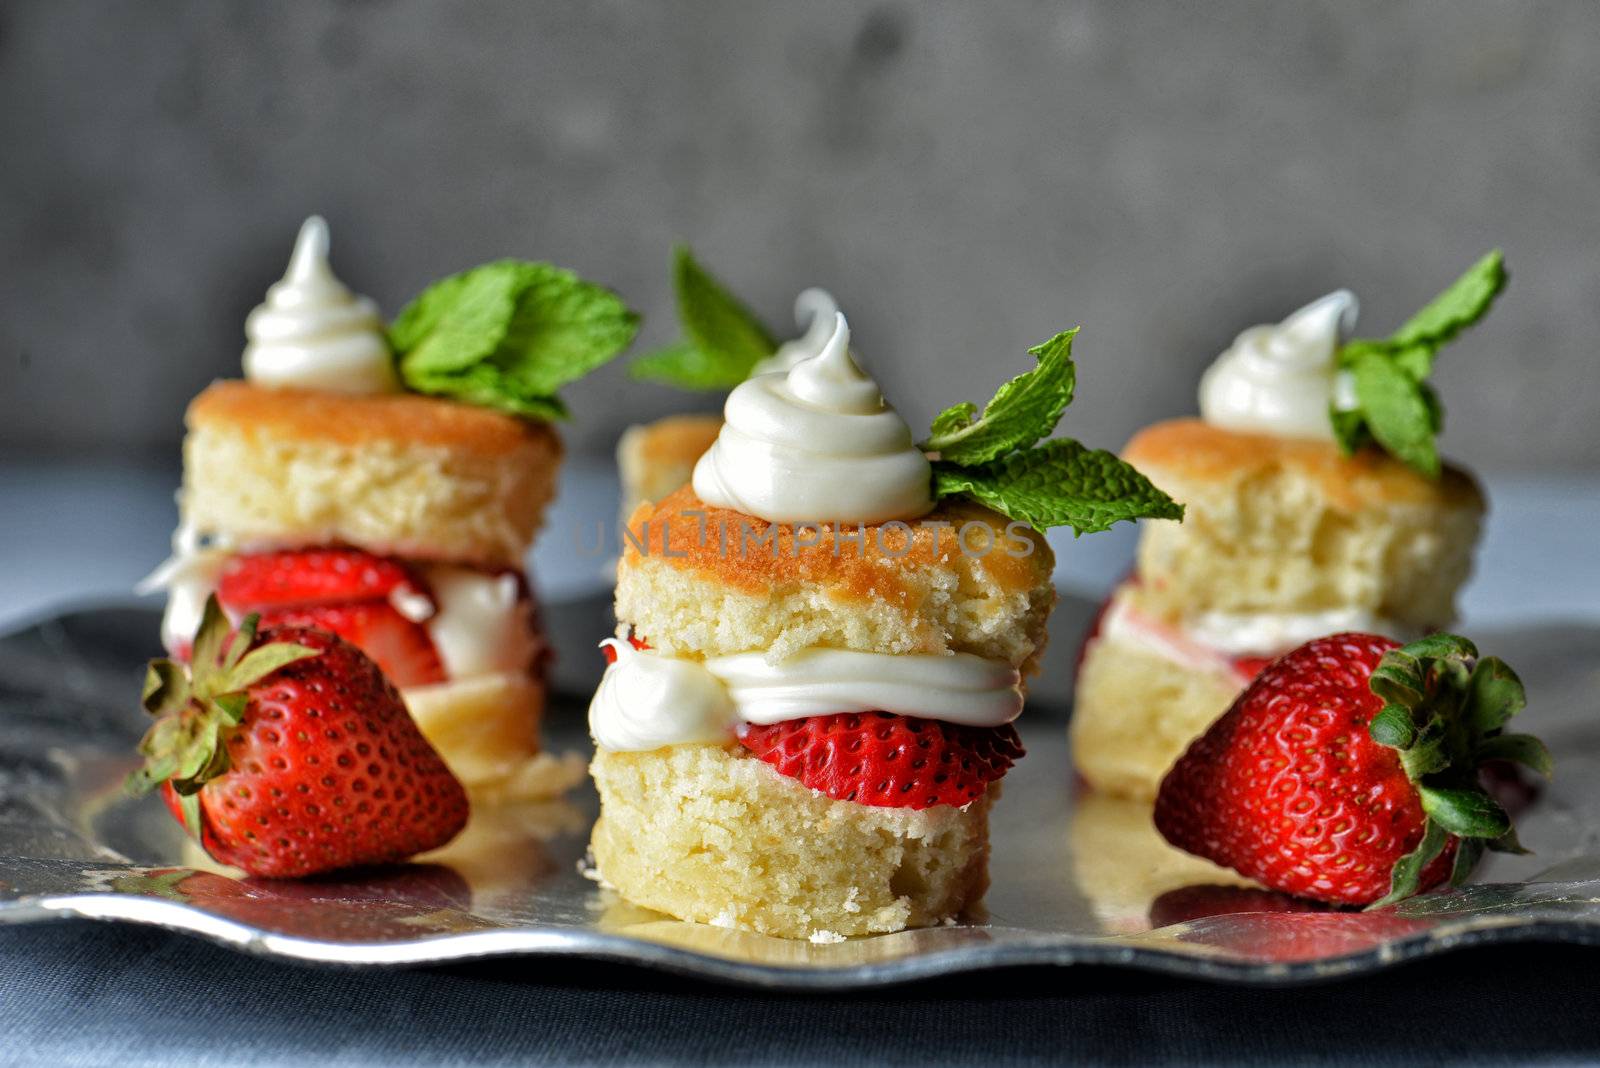 Strawberry Shortcake by gregory21